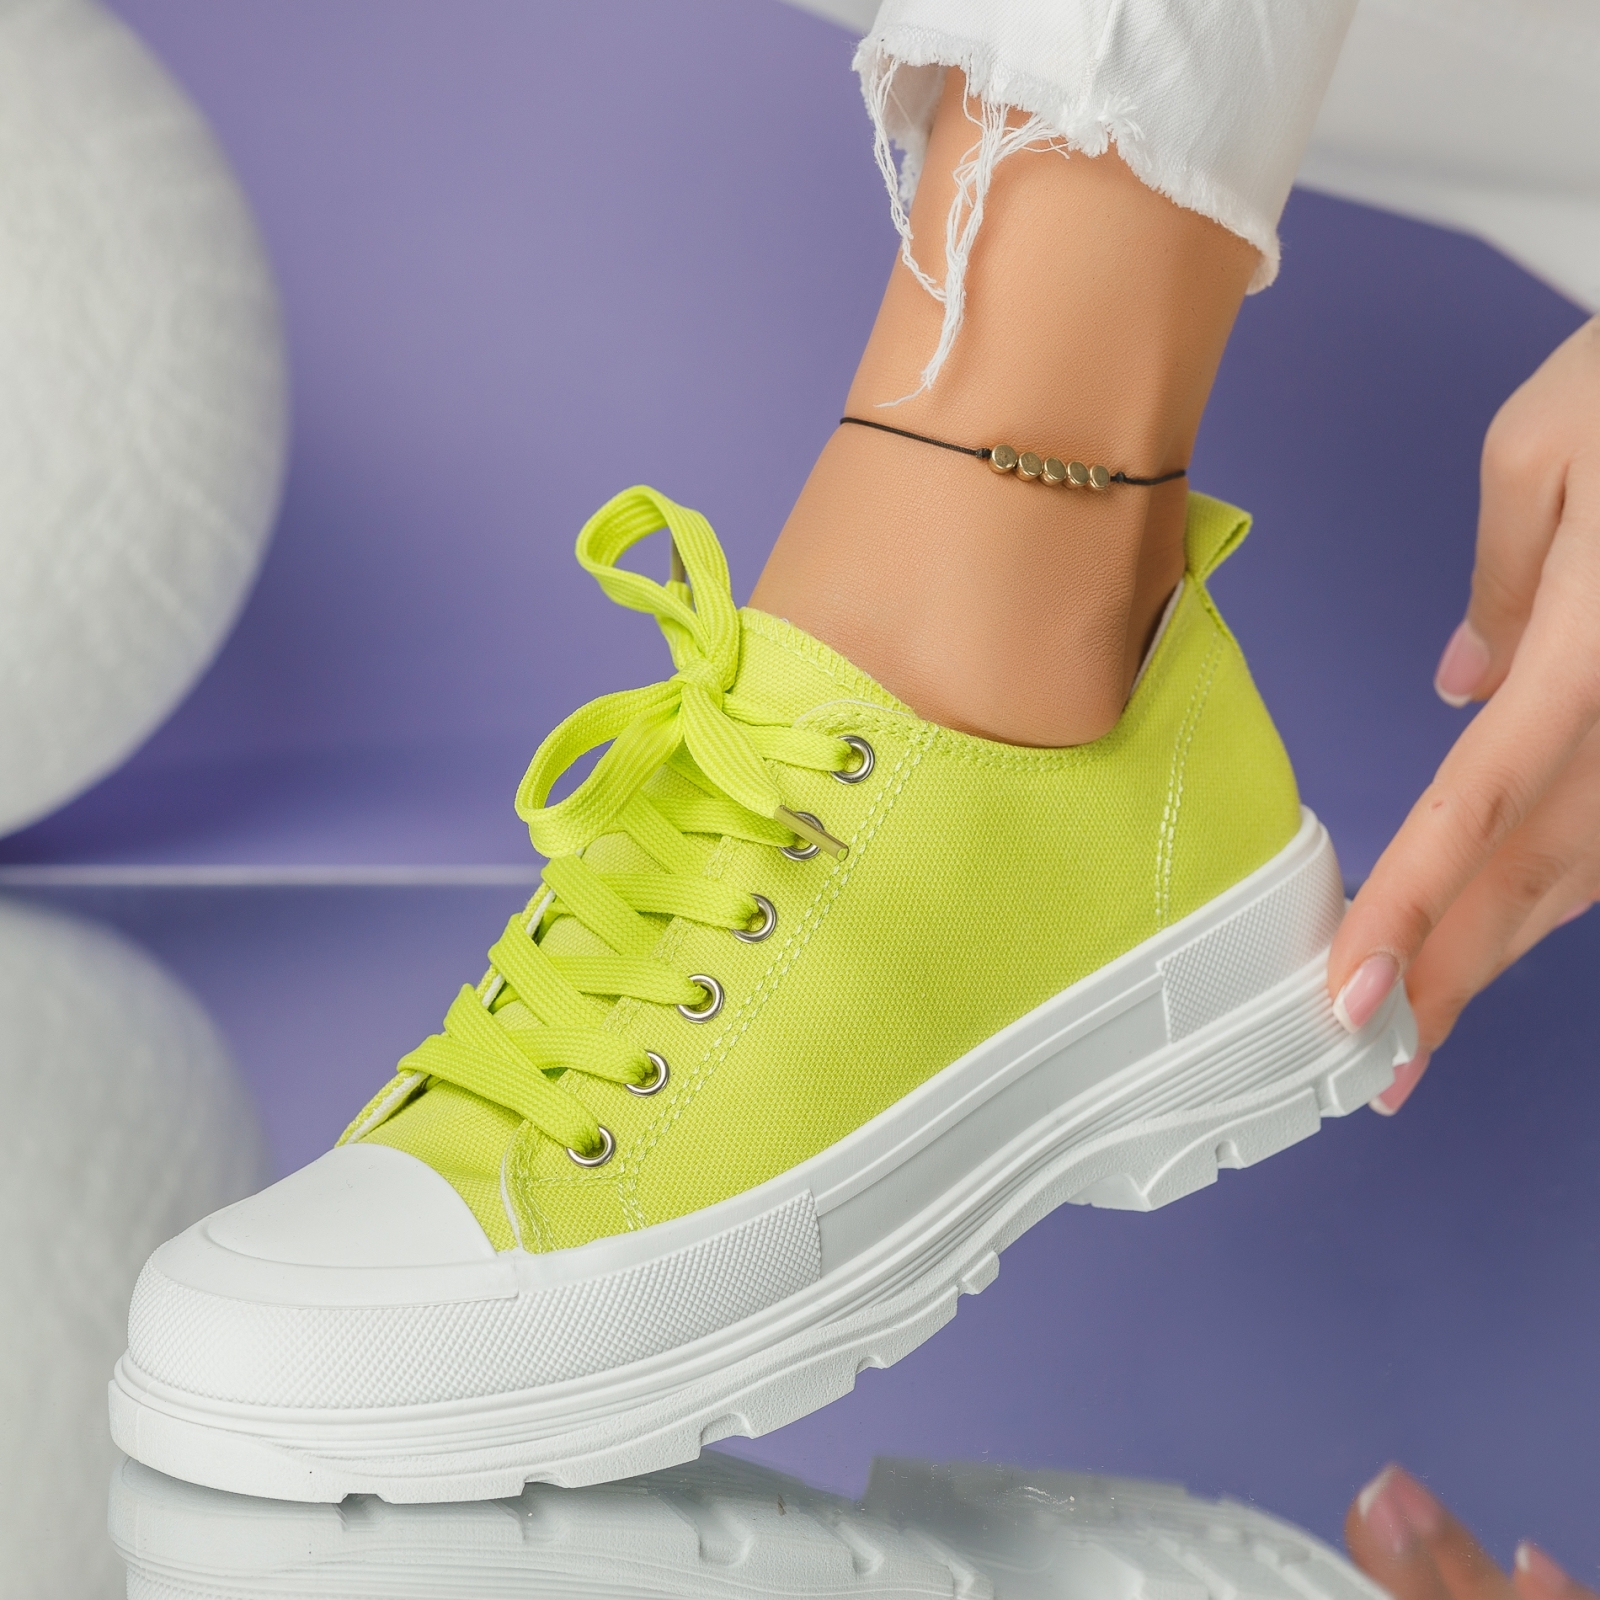 Дамски спортни обувки Pearl4 Neon #4226M